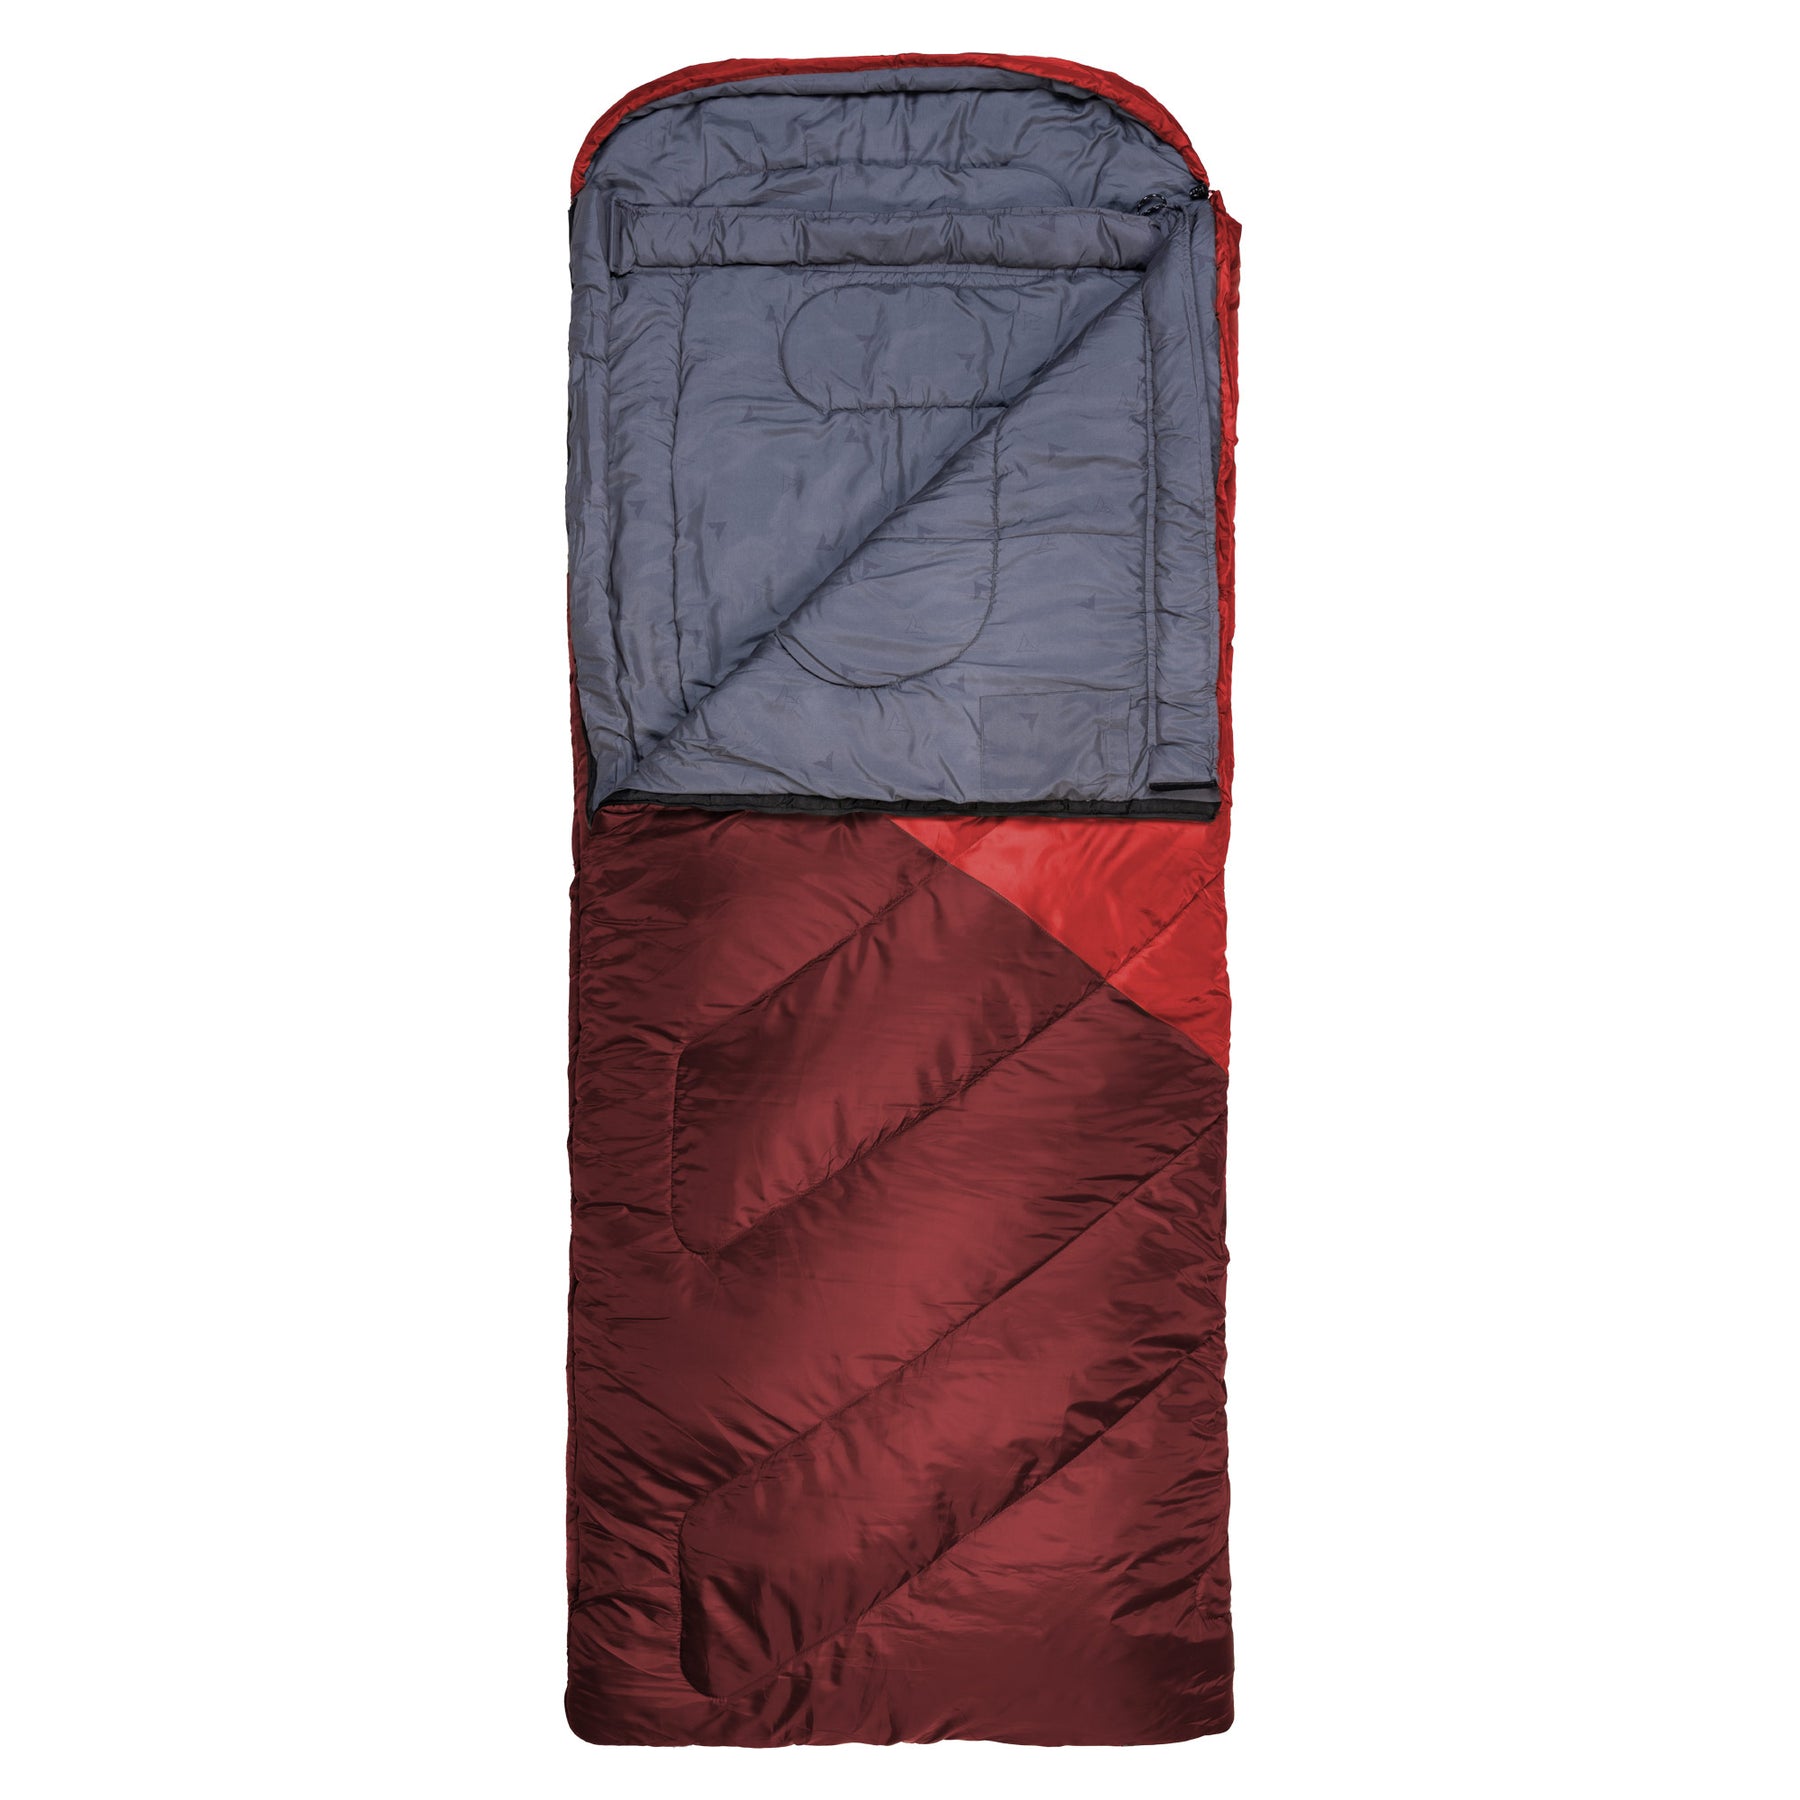 Celsius 20°F / -7°C Sleeping Bag